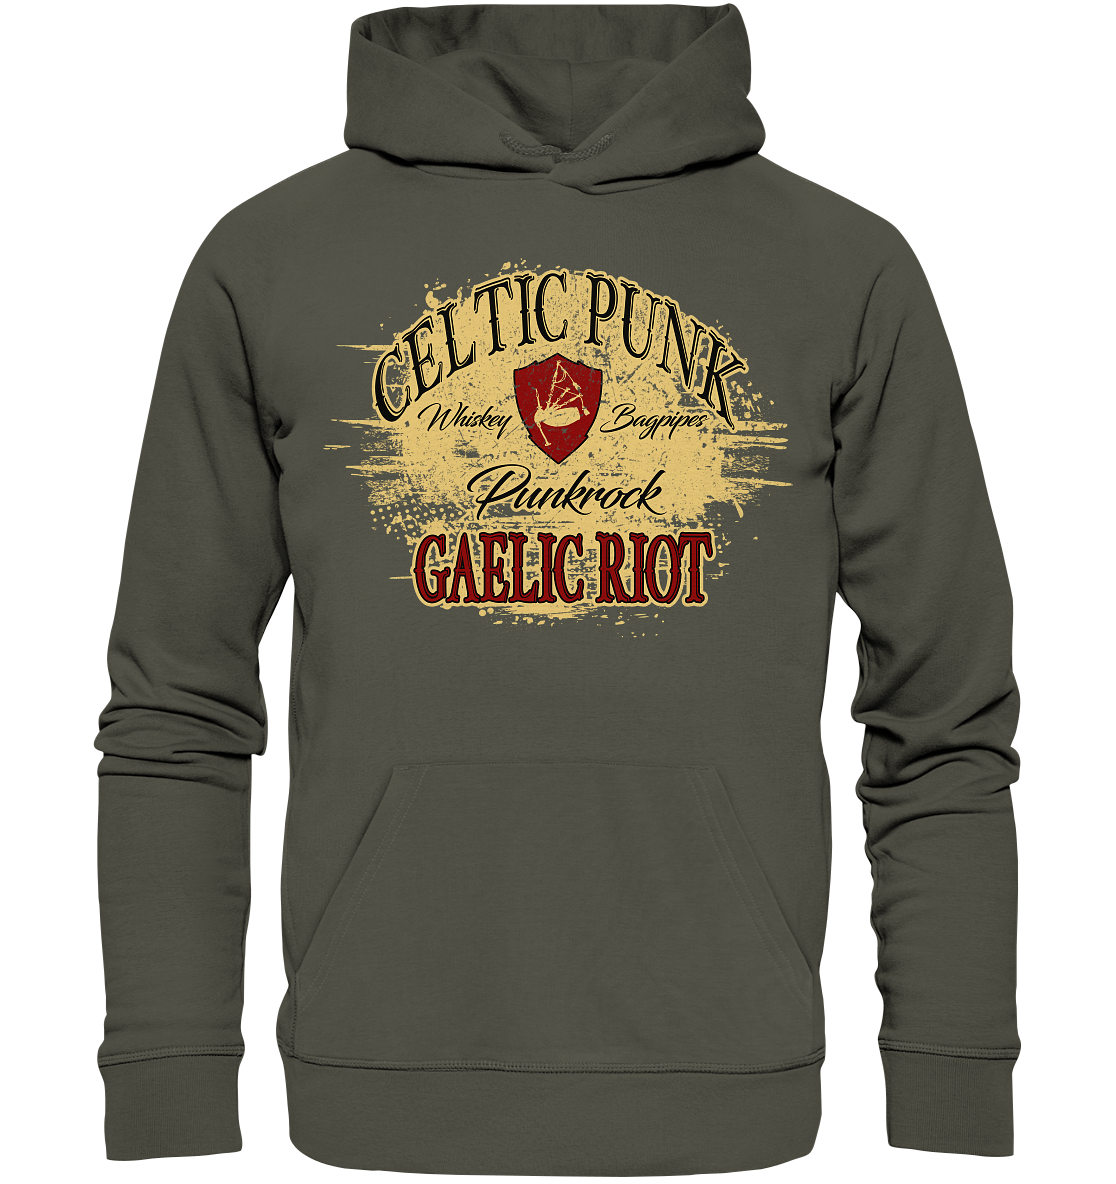 Celtic Punk "Gaelic Riot" - Organic Hoodie